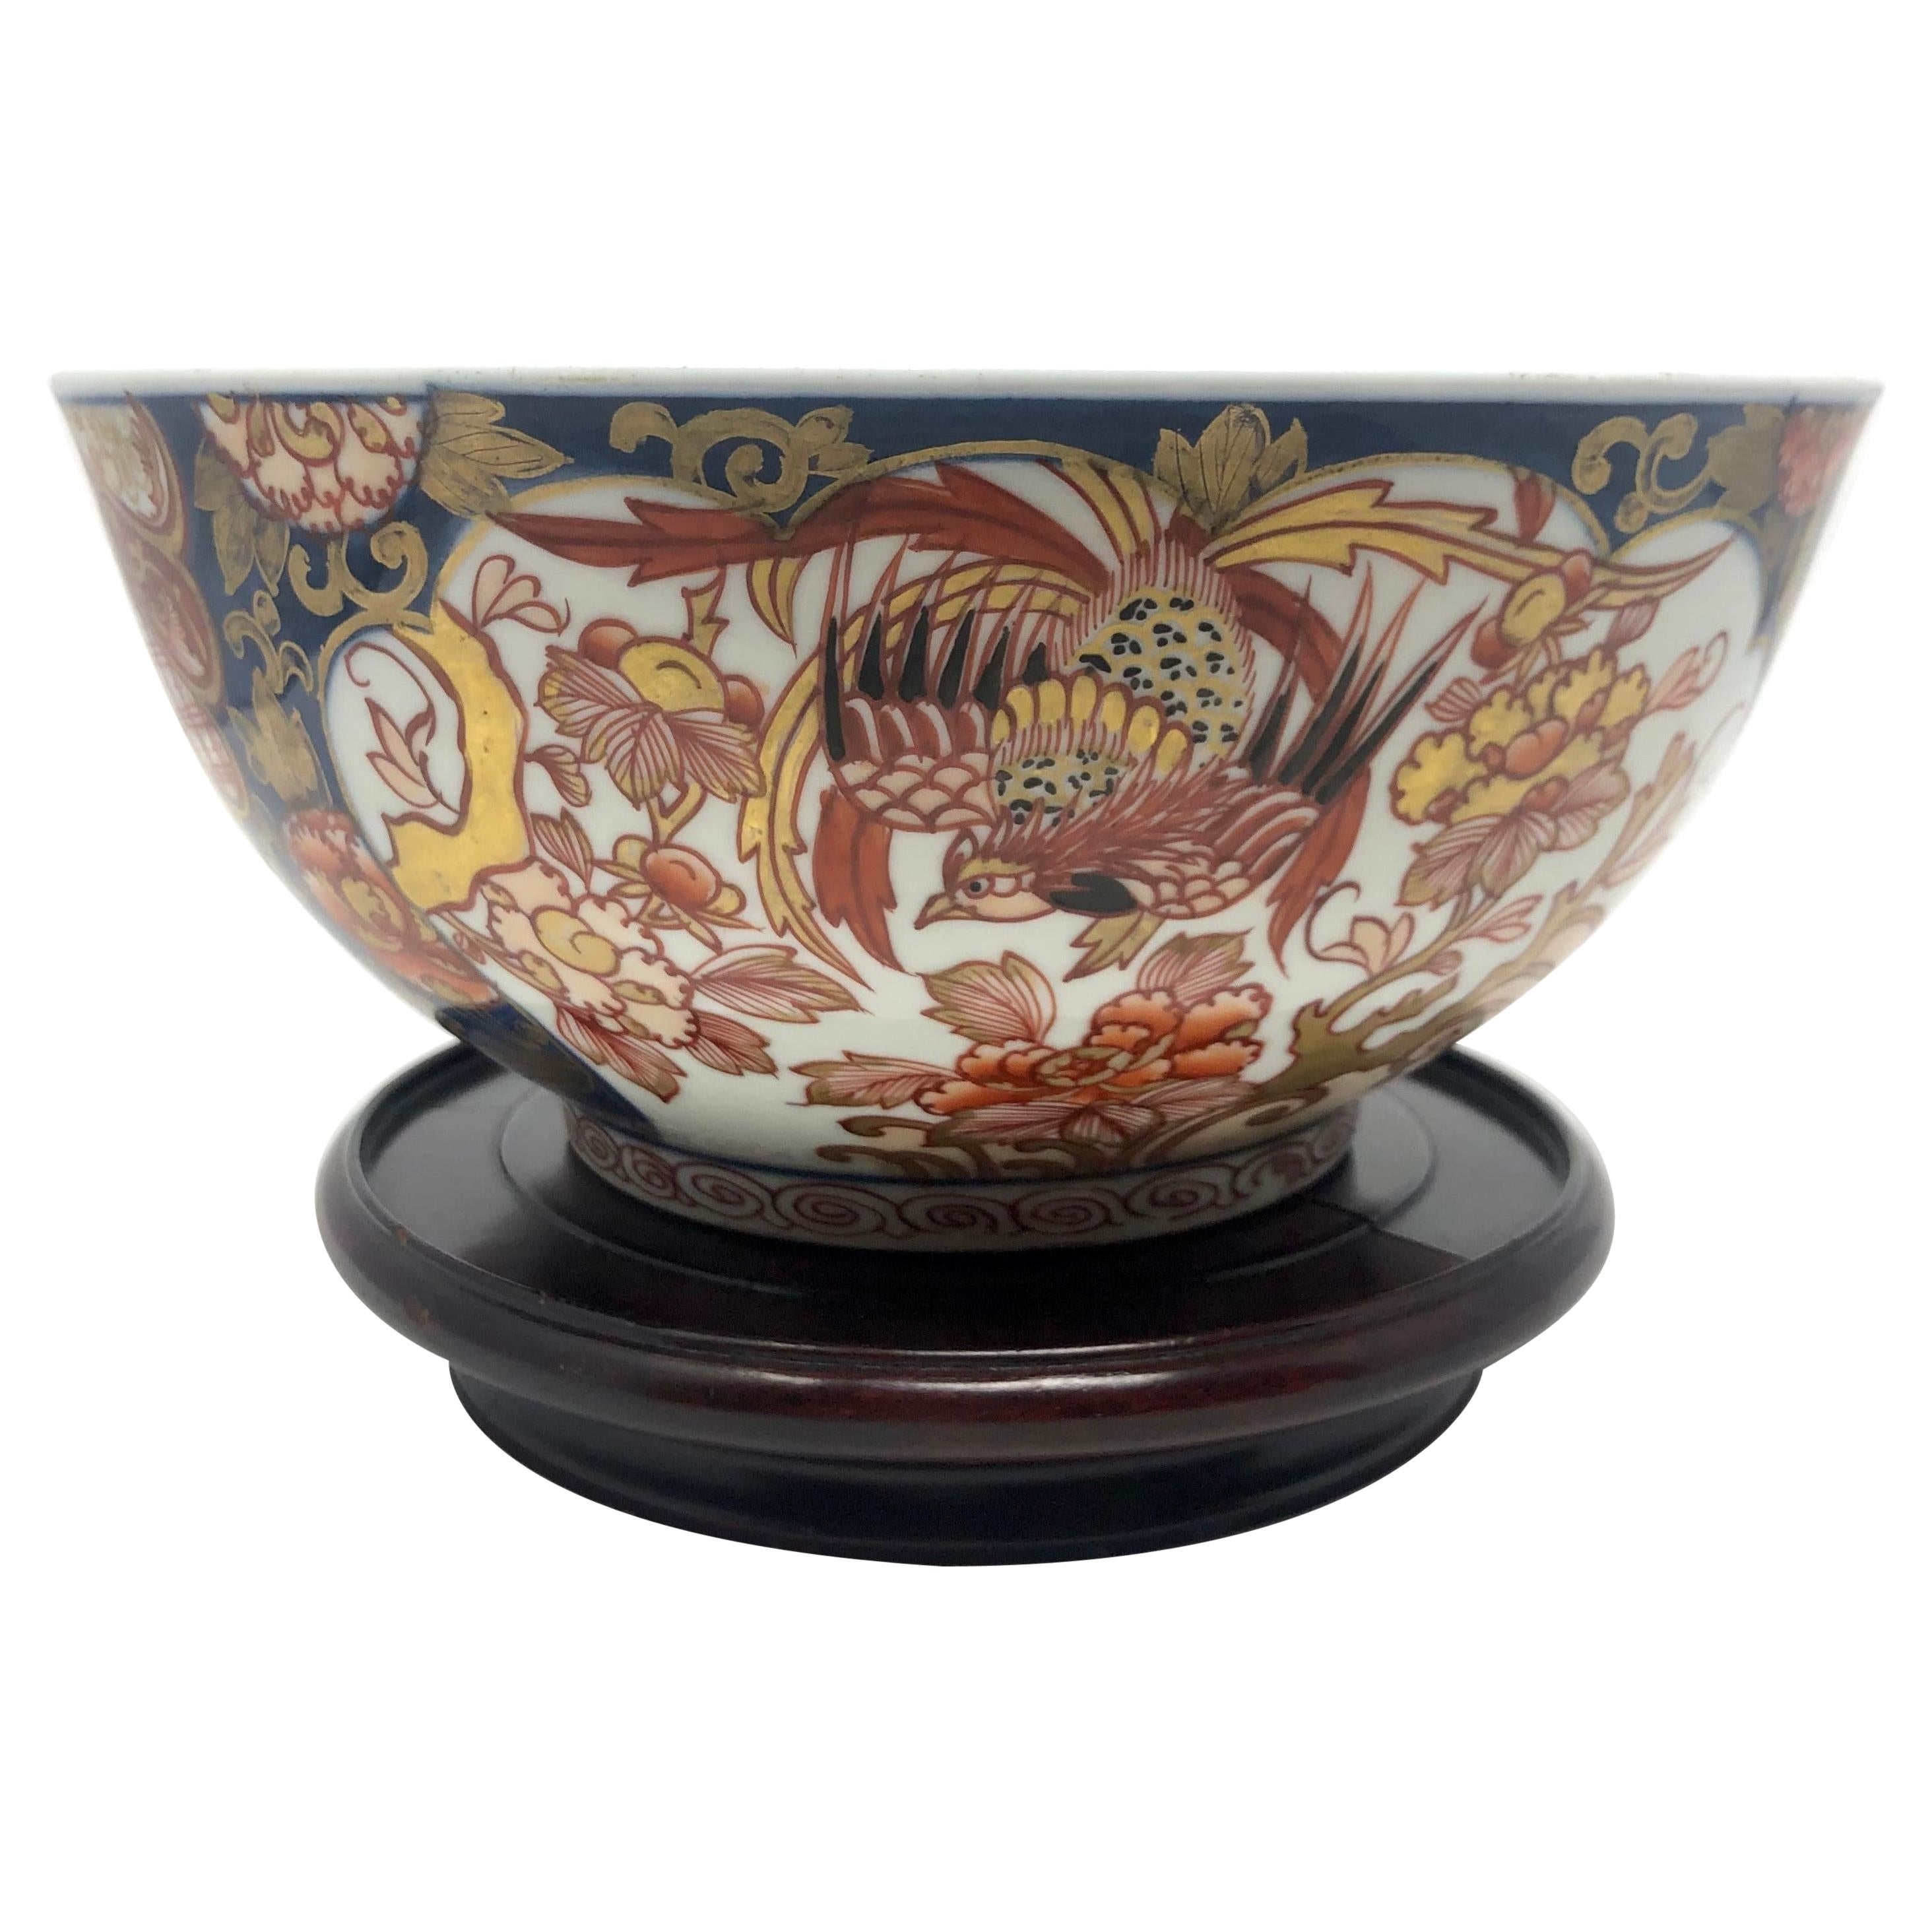 Antique Japanese Imari Porcelain Bowl on Stand, Circa 1900